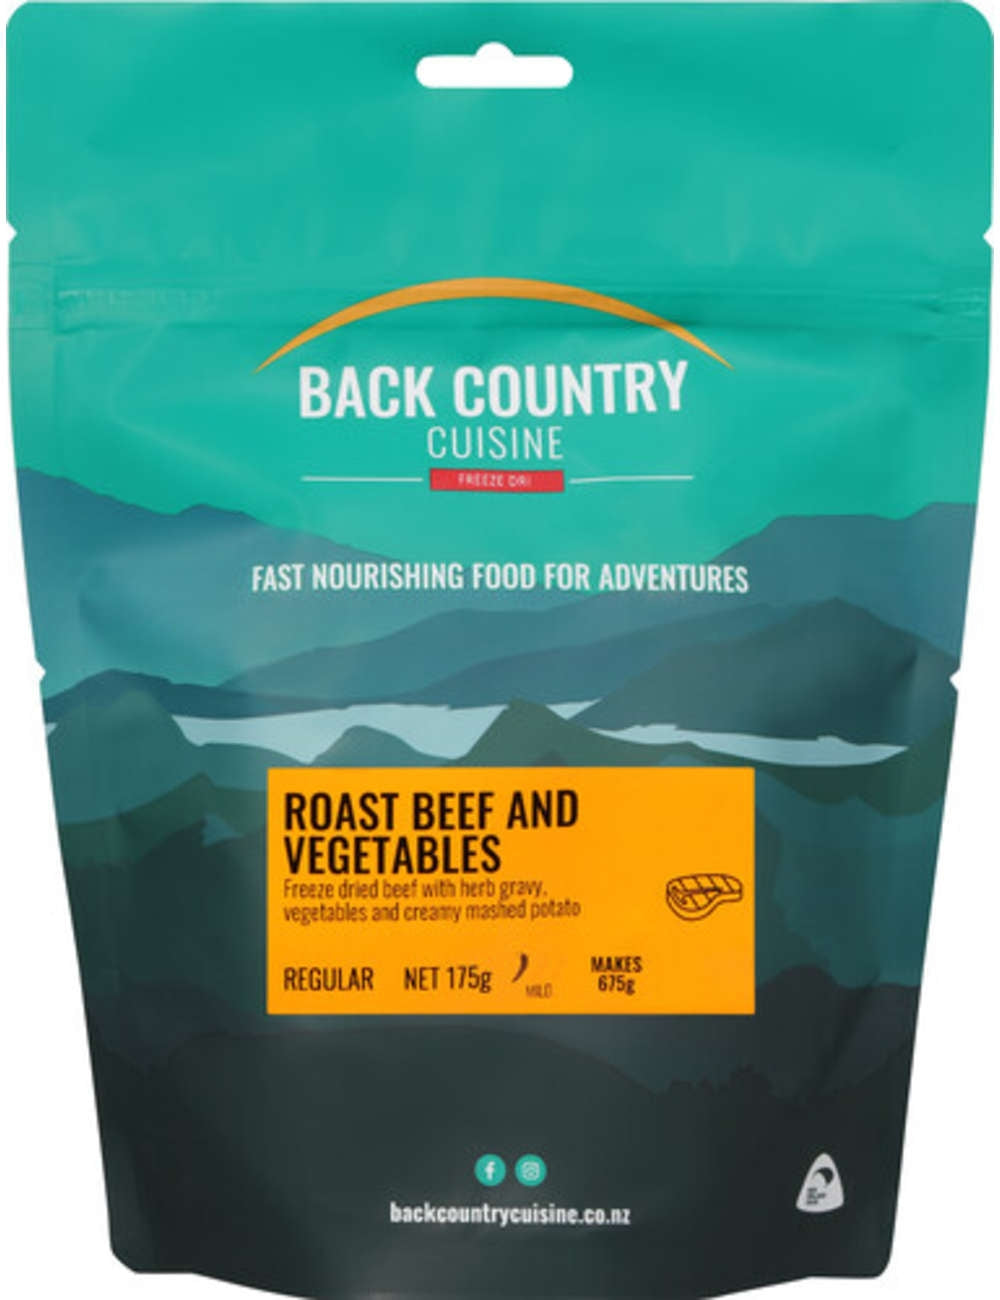 Back Country Cuisine Roast Beef and Vegetables - Find Your Feet Australia Hobart Launceston Tasmania